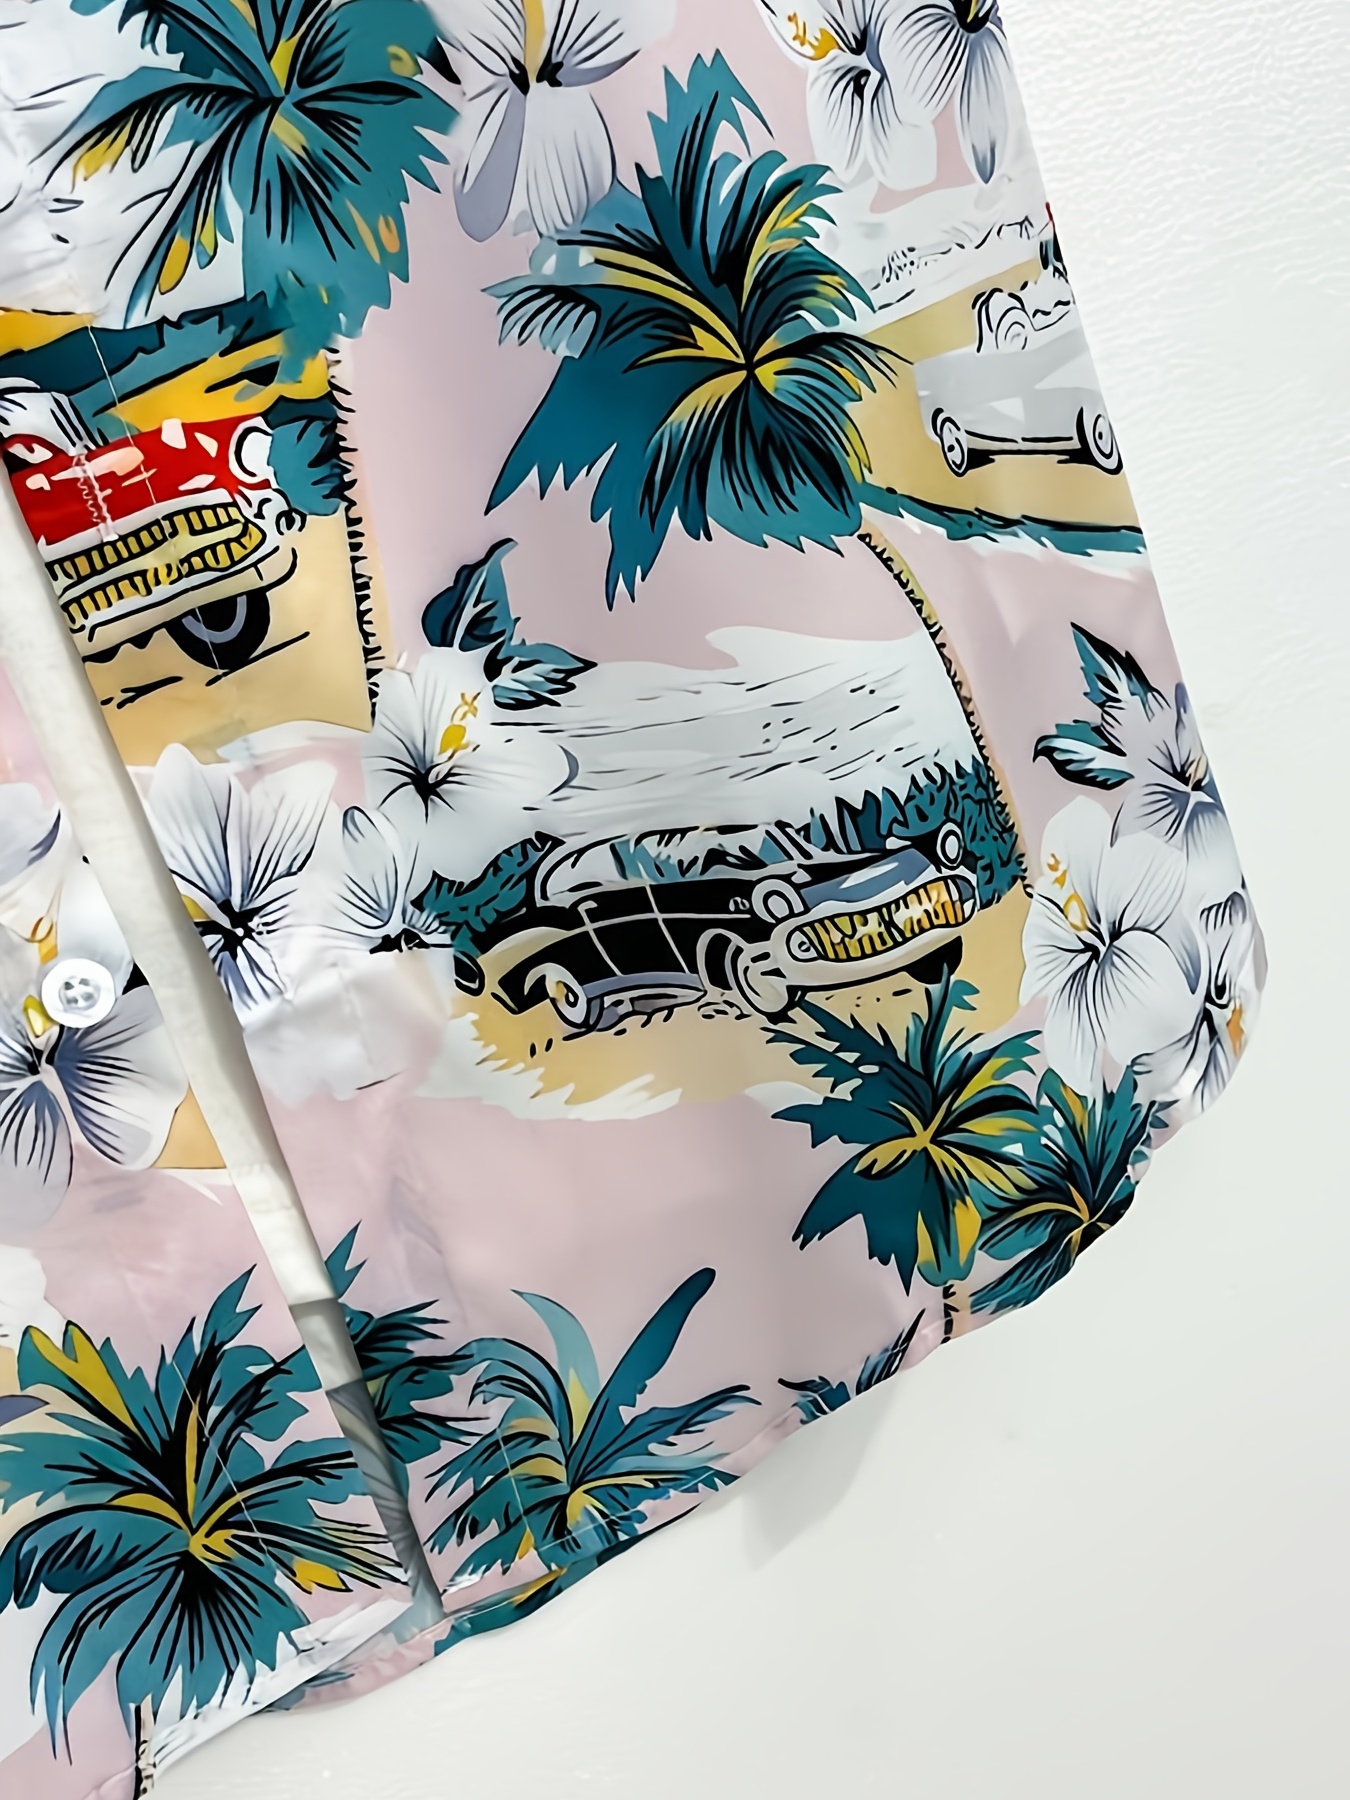 coconut tree vintage car print mens casual short sleeve shirt mens shirt for summer vacation resort details 4